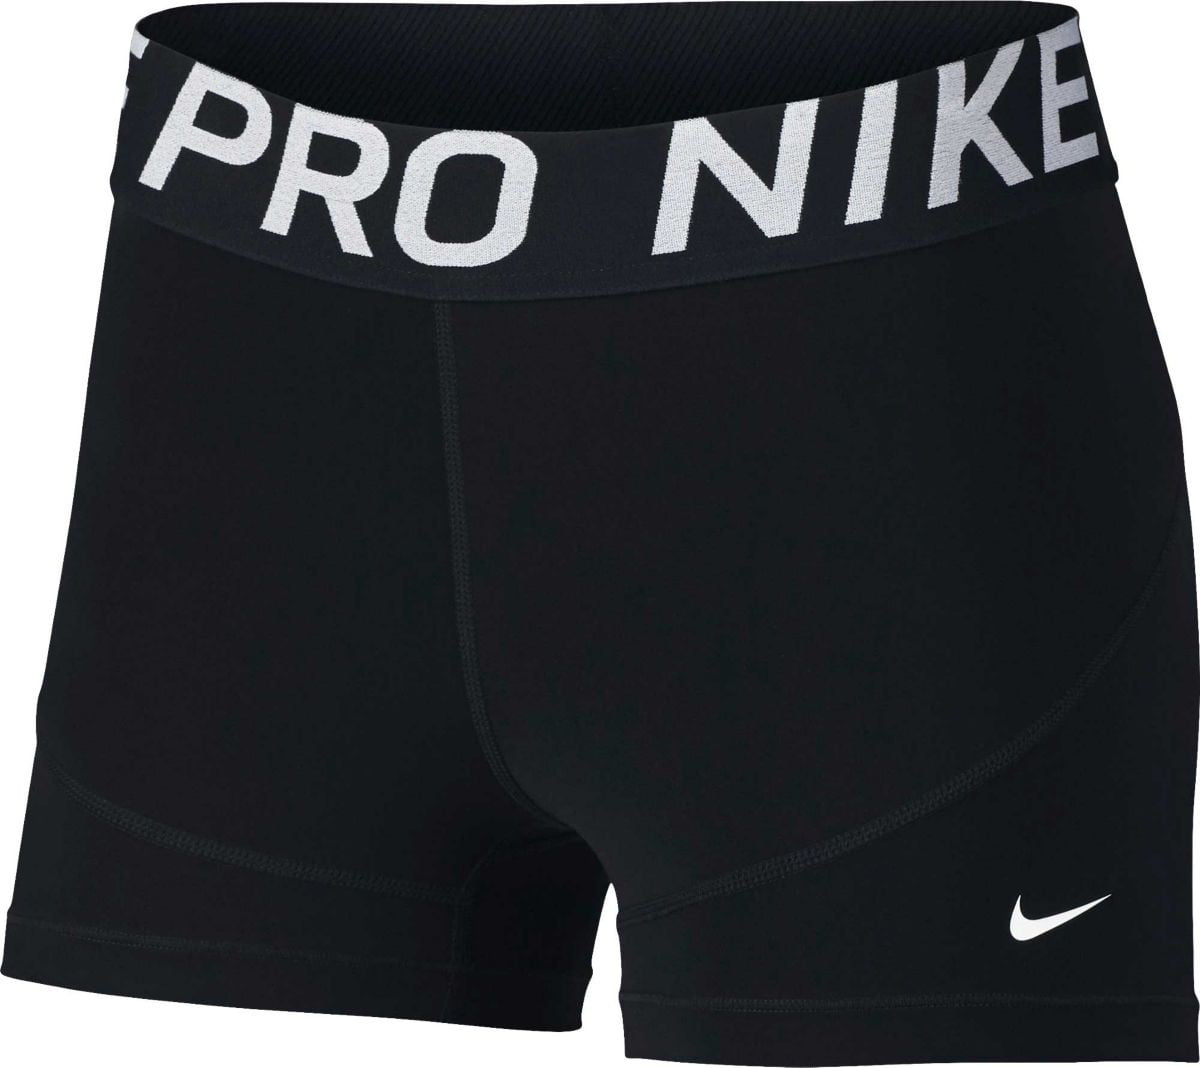 Nike Pro 3" Training - Walmart.com